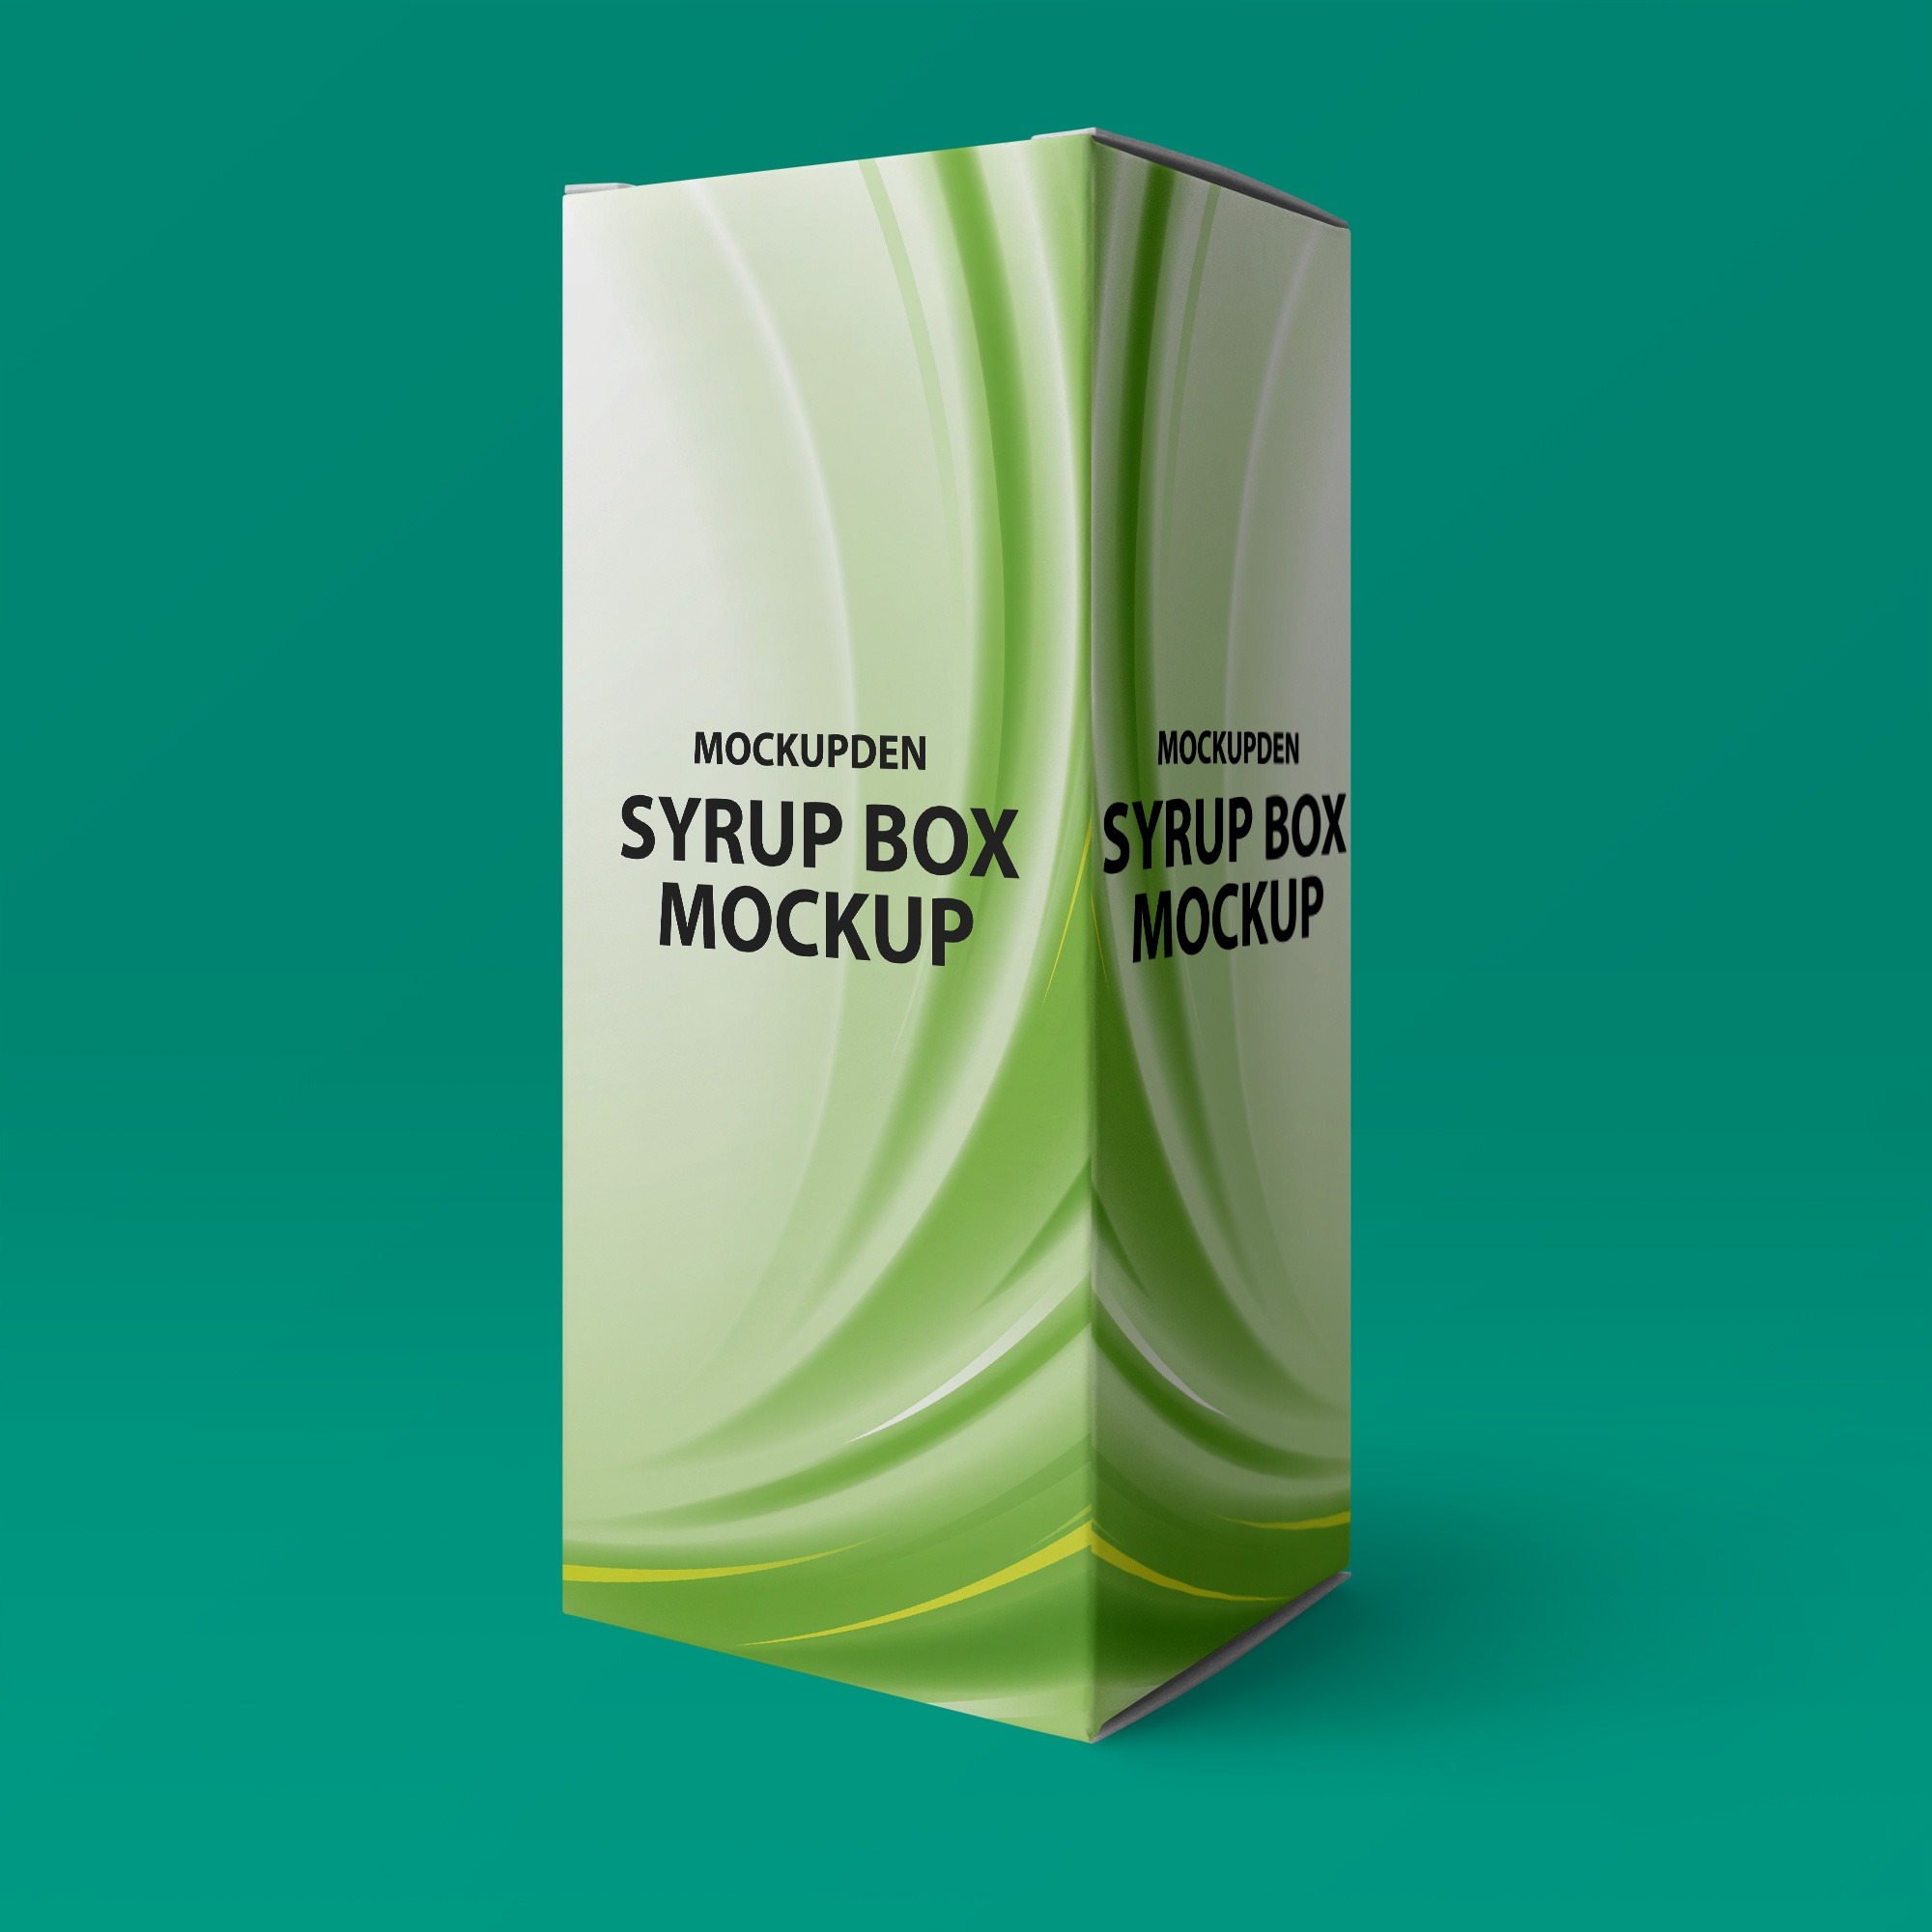 Syrup Box Packaging Mockup Free Download